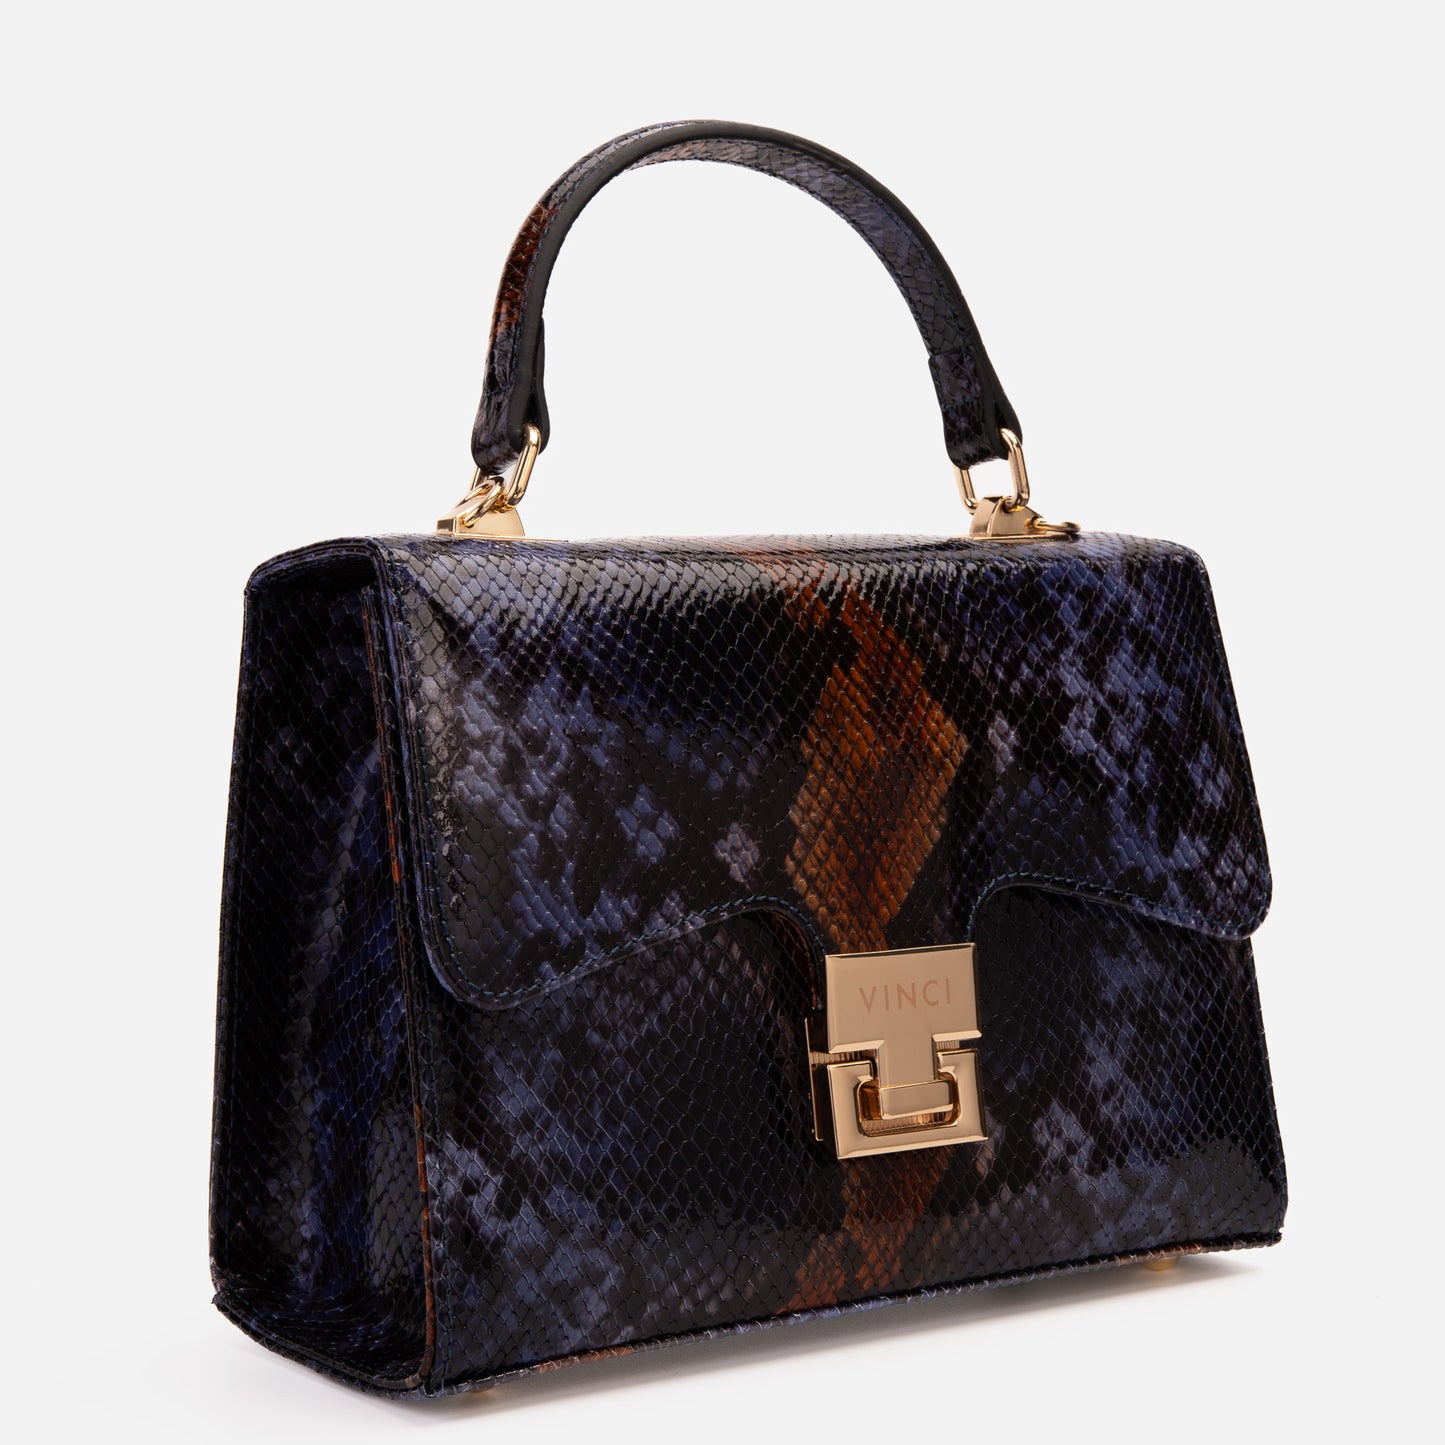 The Venezia Navy Blue Leather Snk Handbag